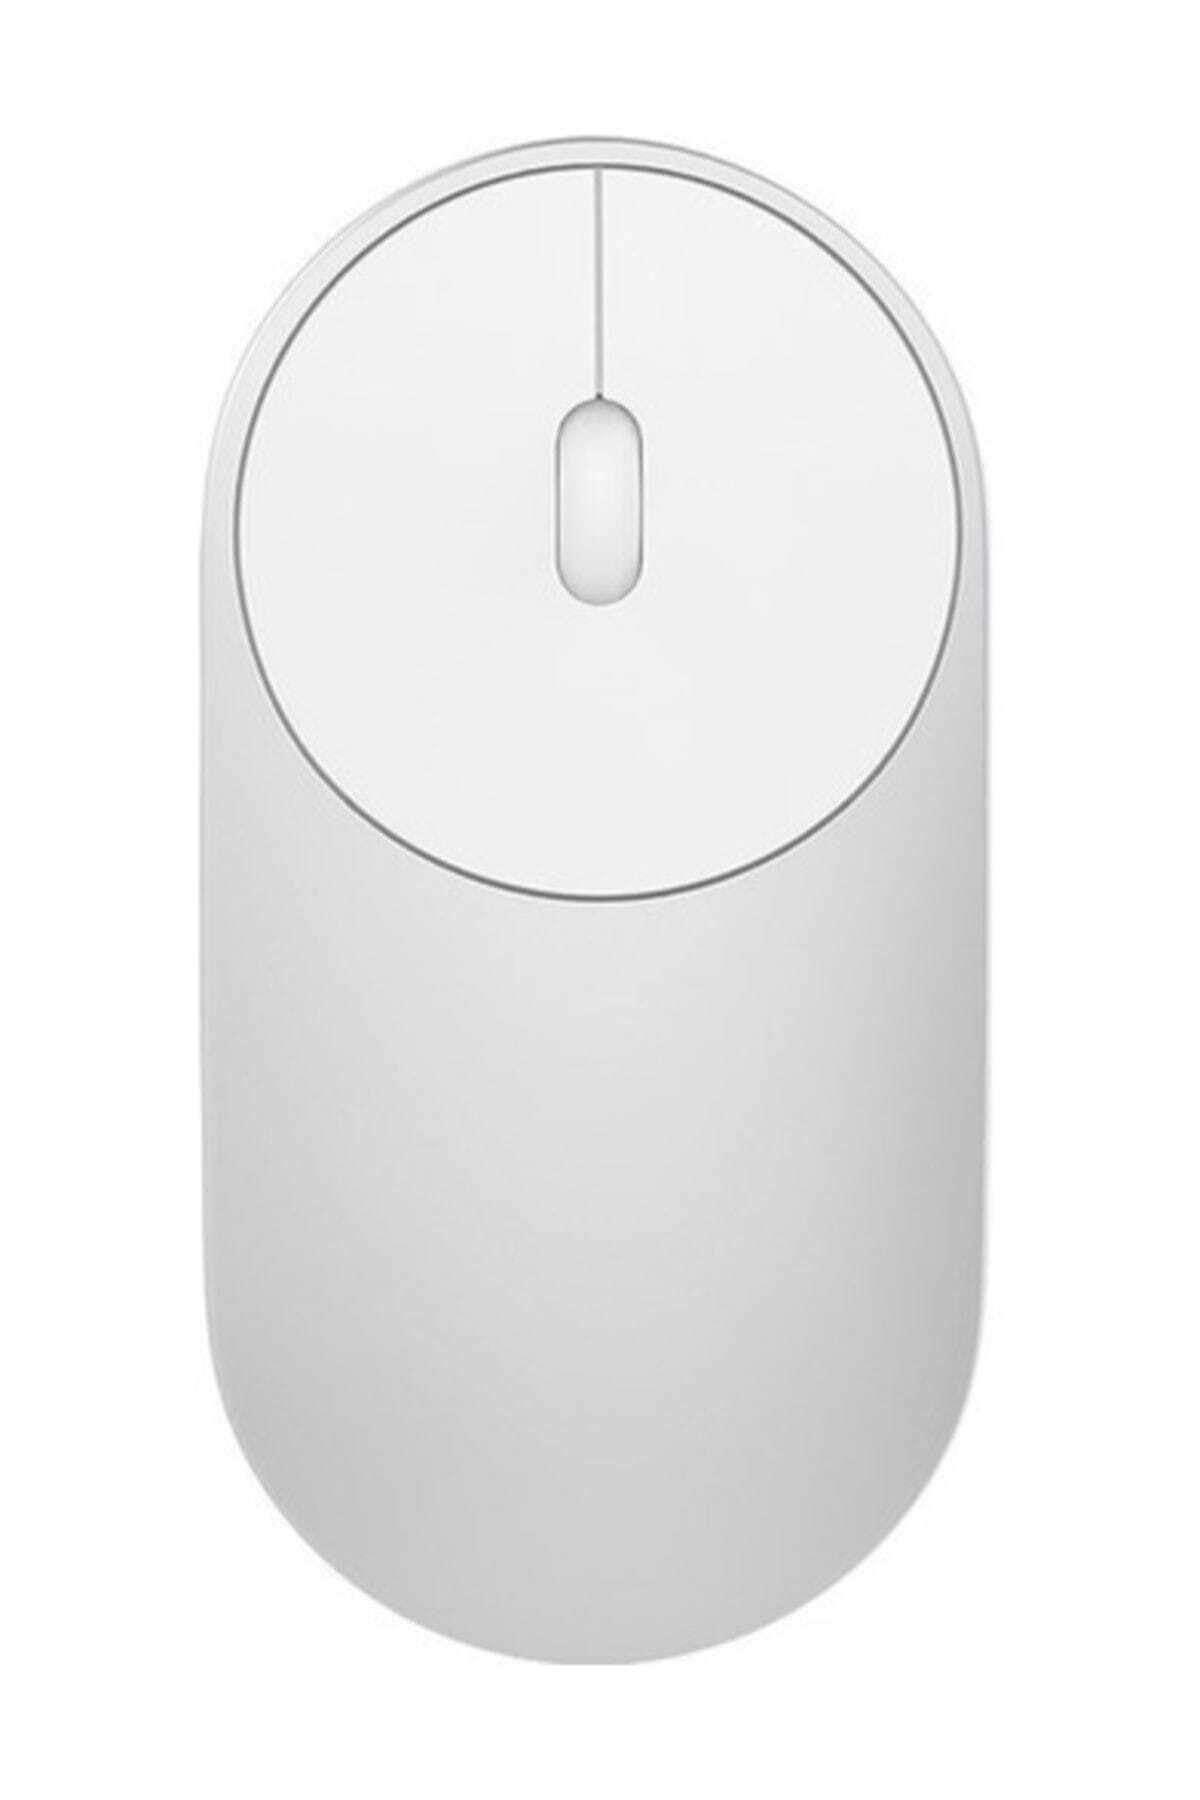 YUES Wireless 1200 Dpi Kablosuz Lazer Mouse